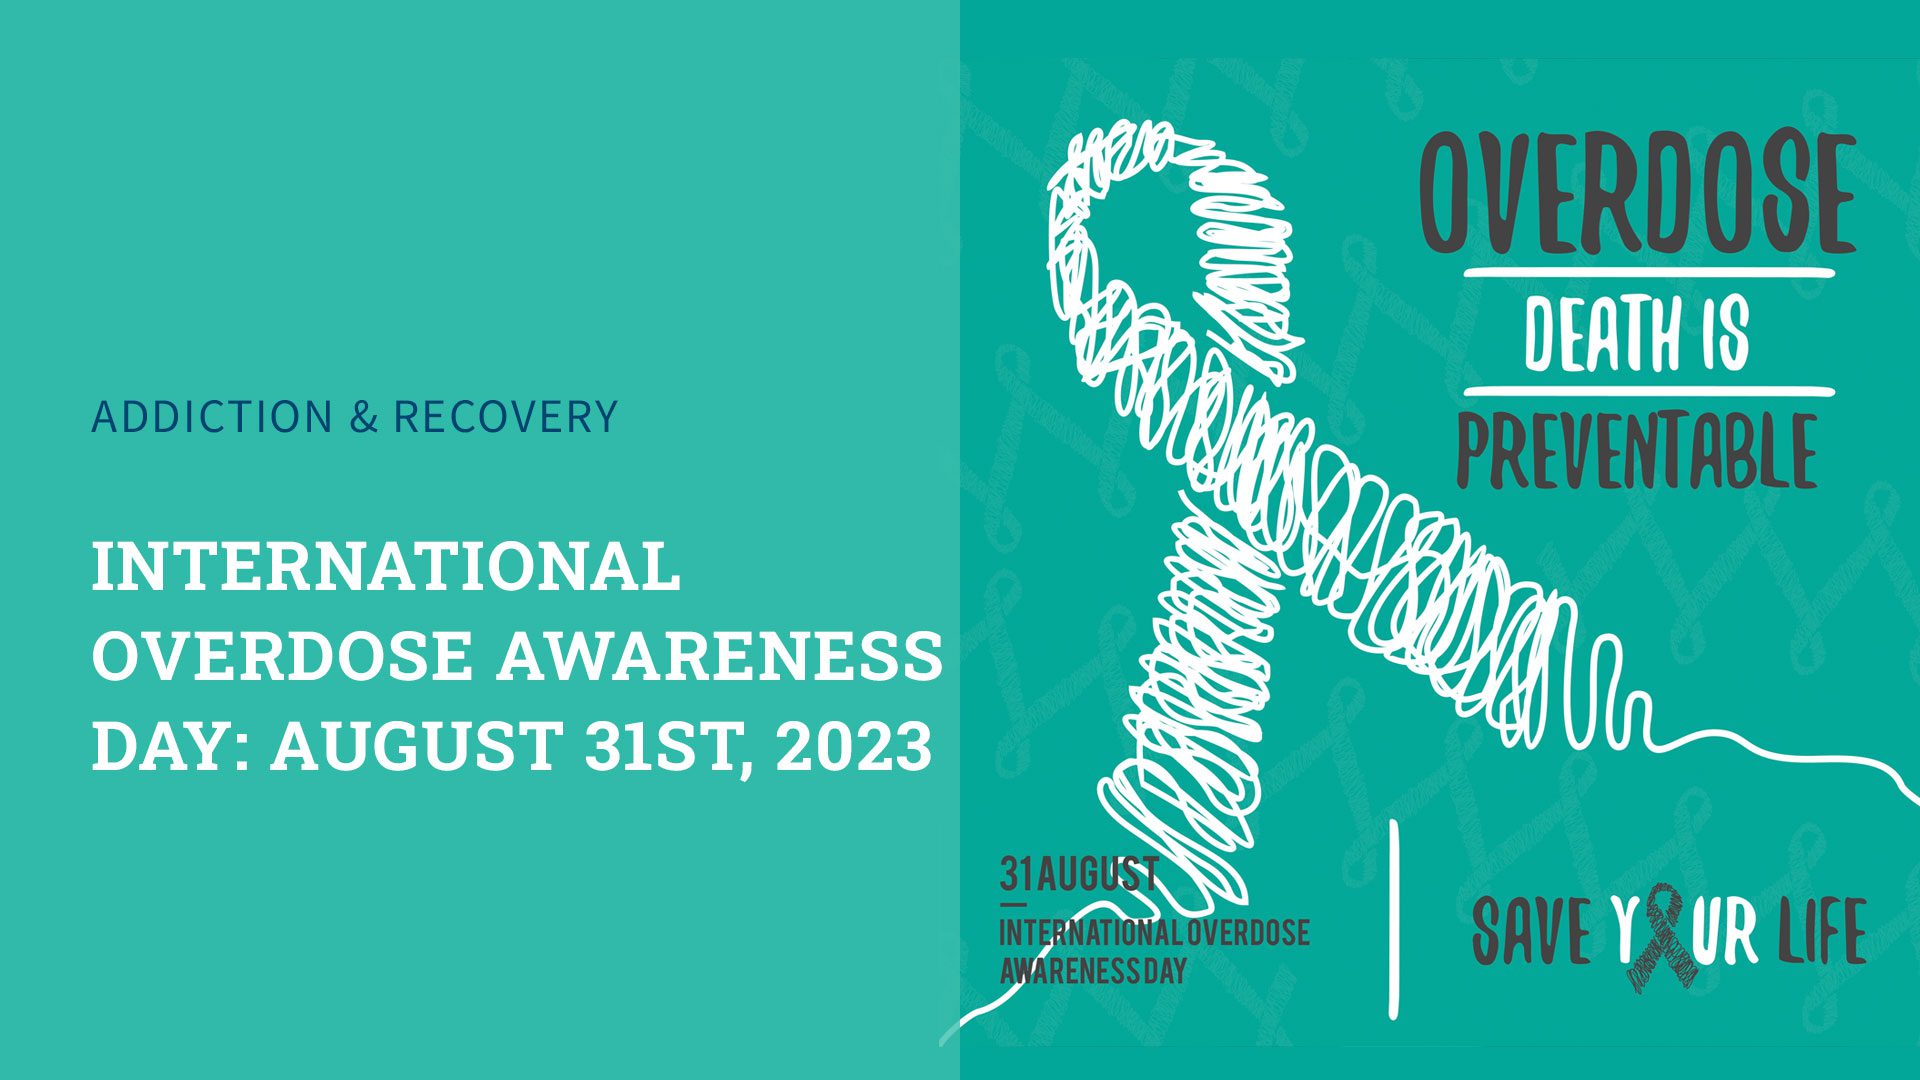 International Overdose Awareness Day: August 31st, 2023